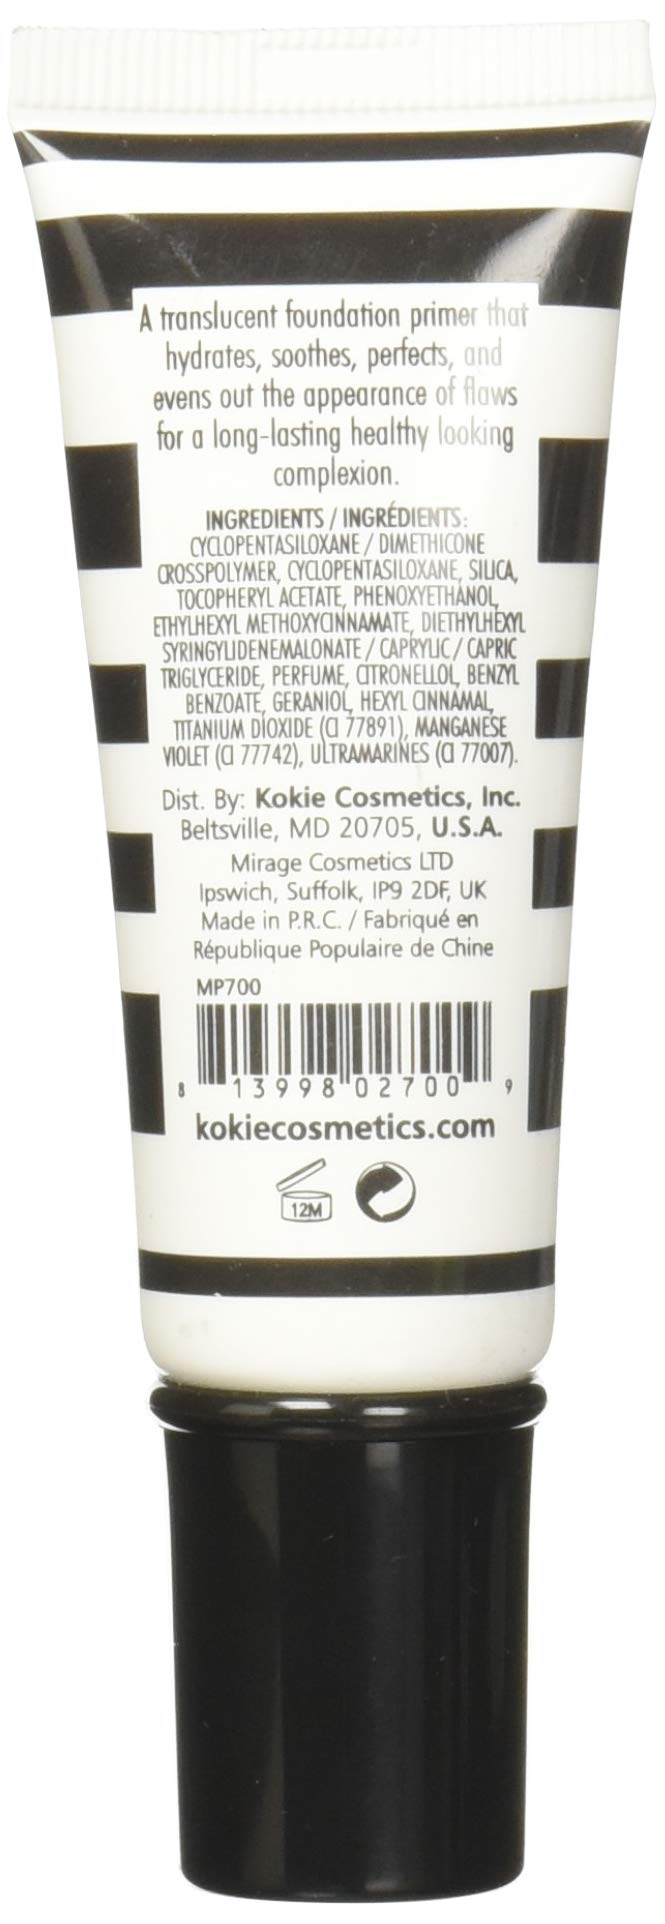 Kokie Professional Smooth Glow Hydrating Face Primer .68 Fl Oz